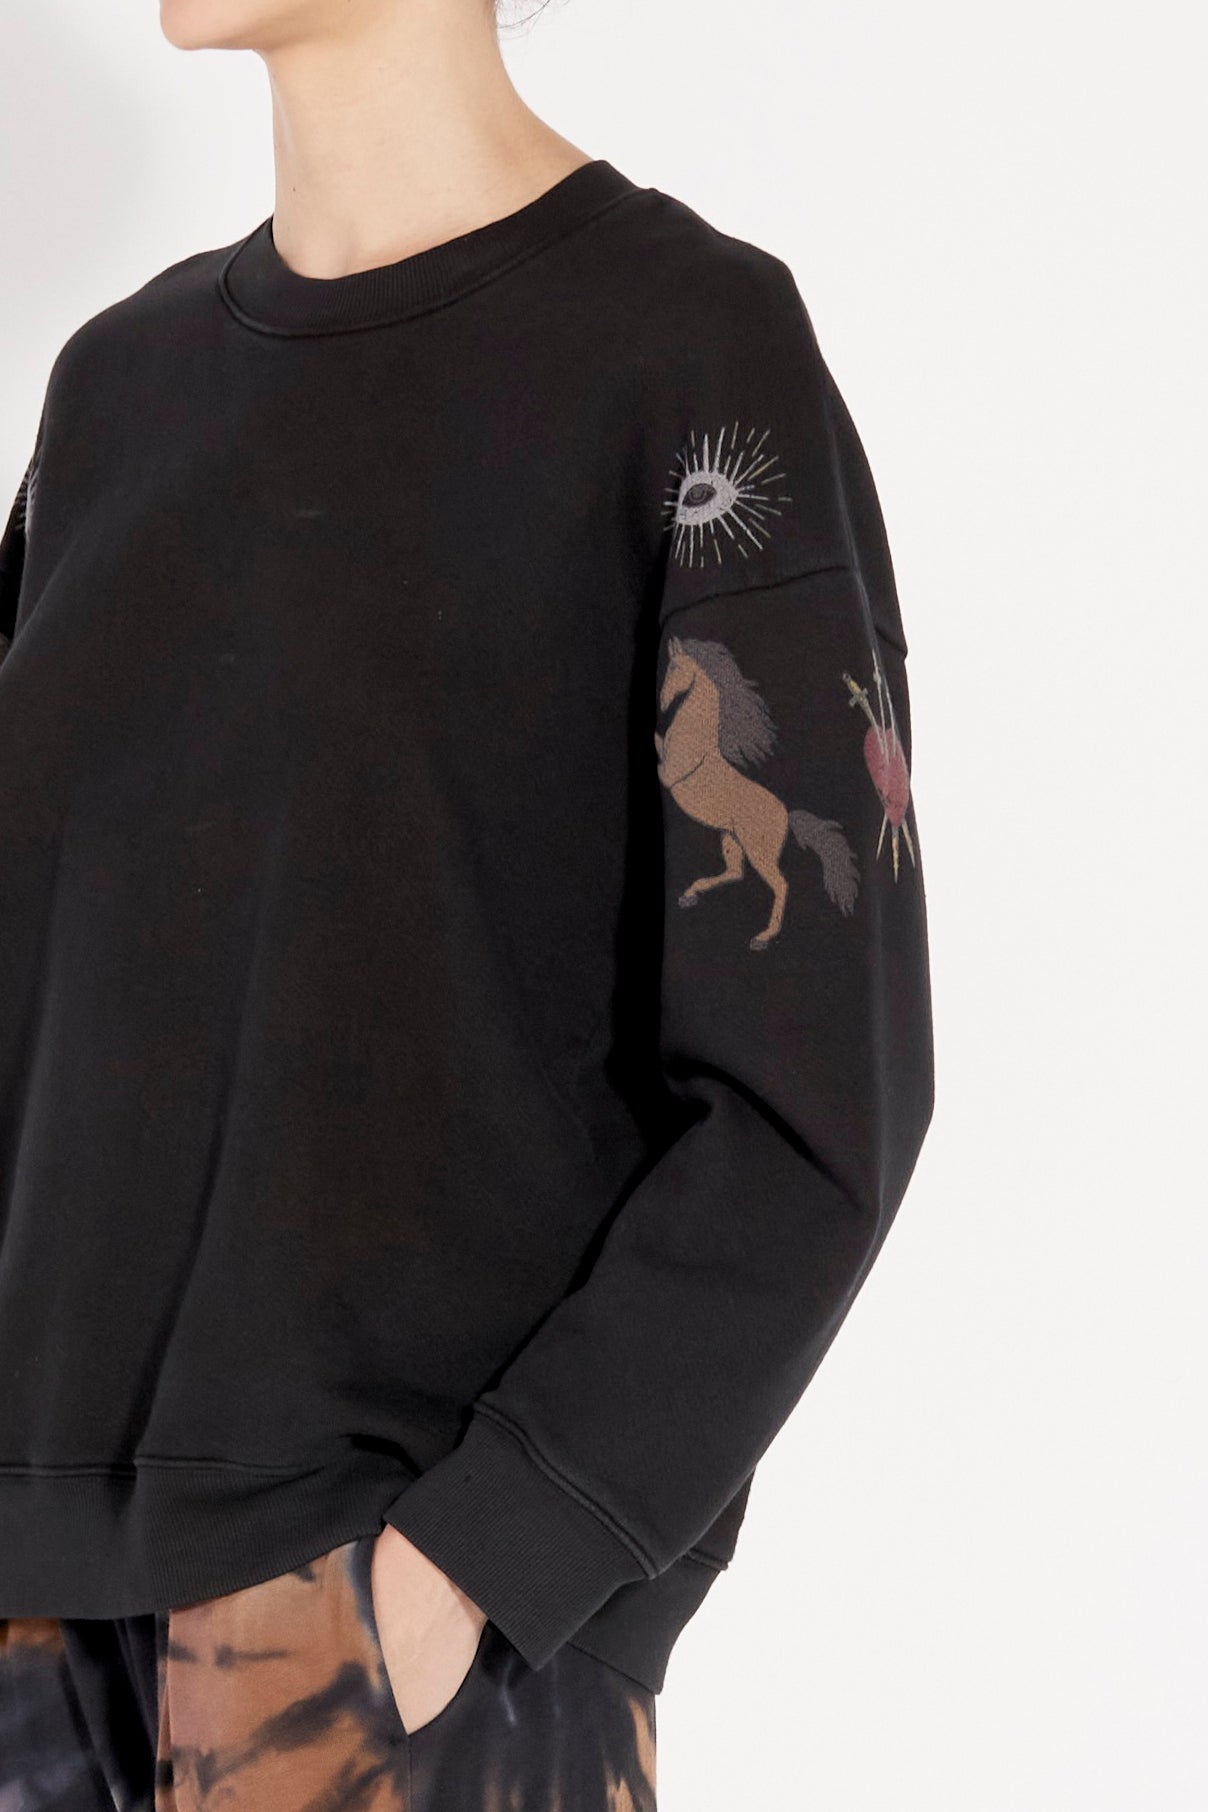 Black Tarot Fleece Yves Sweatshirt Side Close-Up View